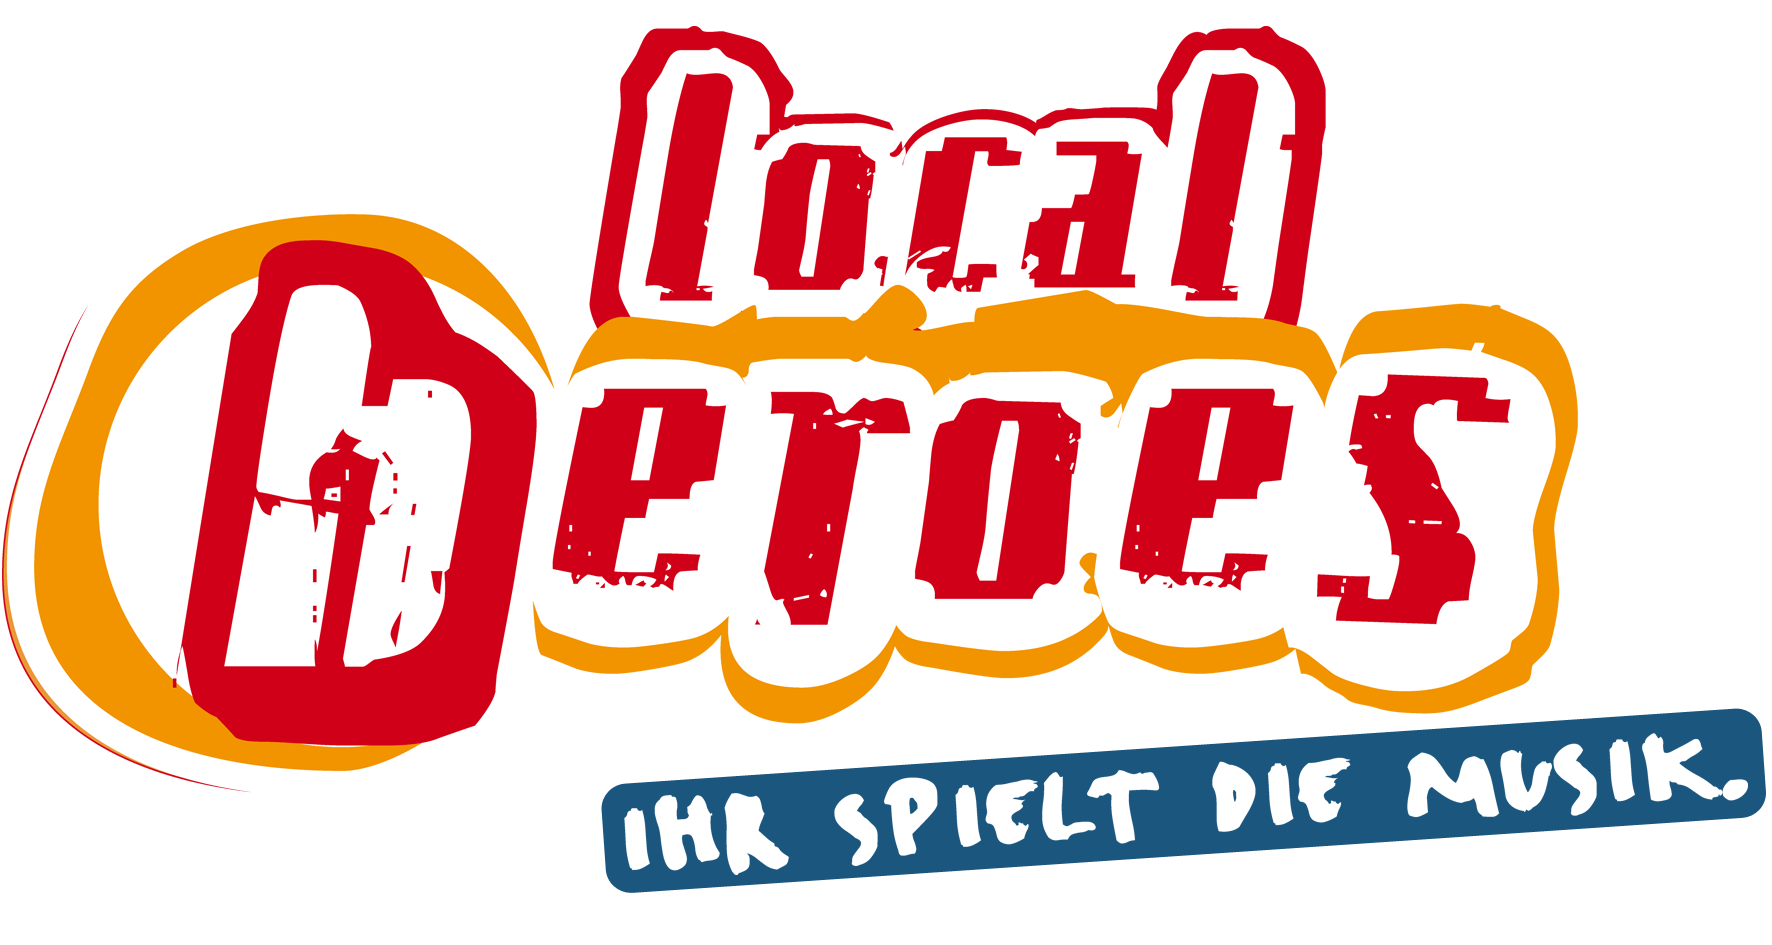 Logo Local Heroes